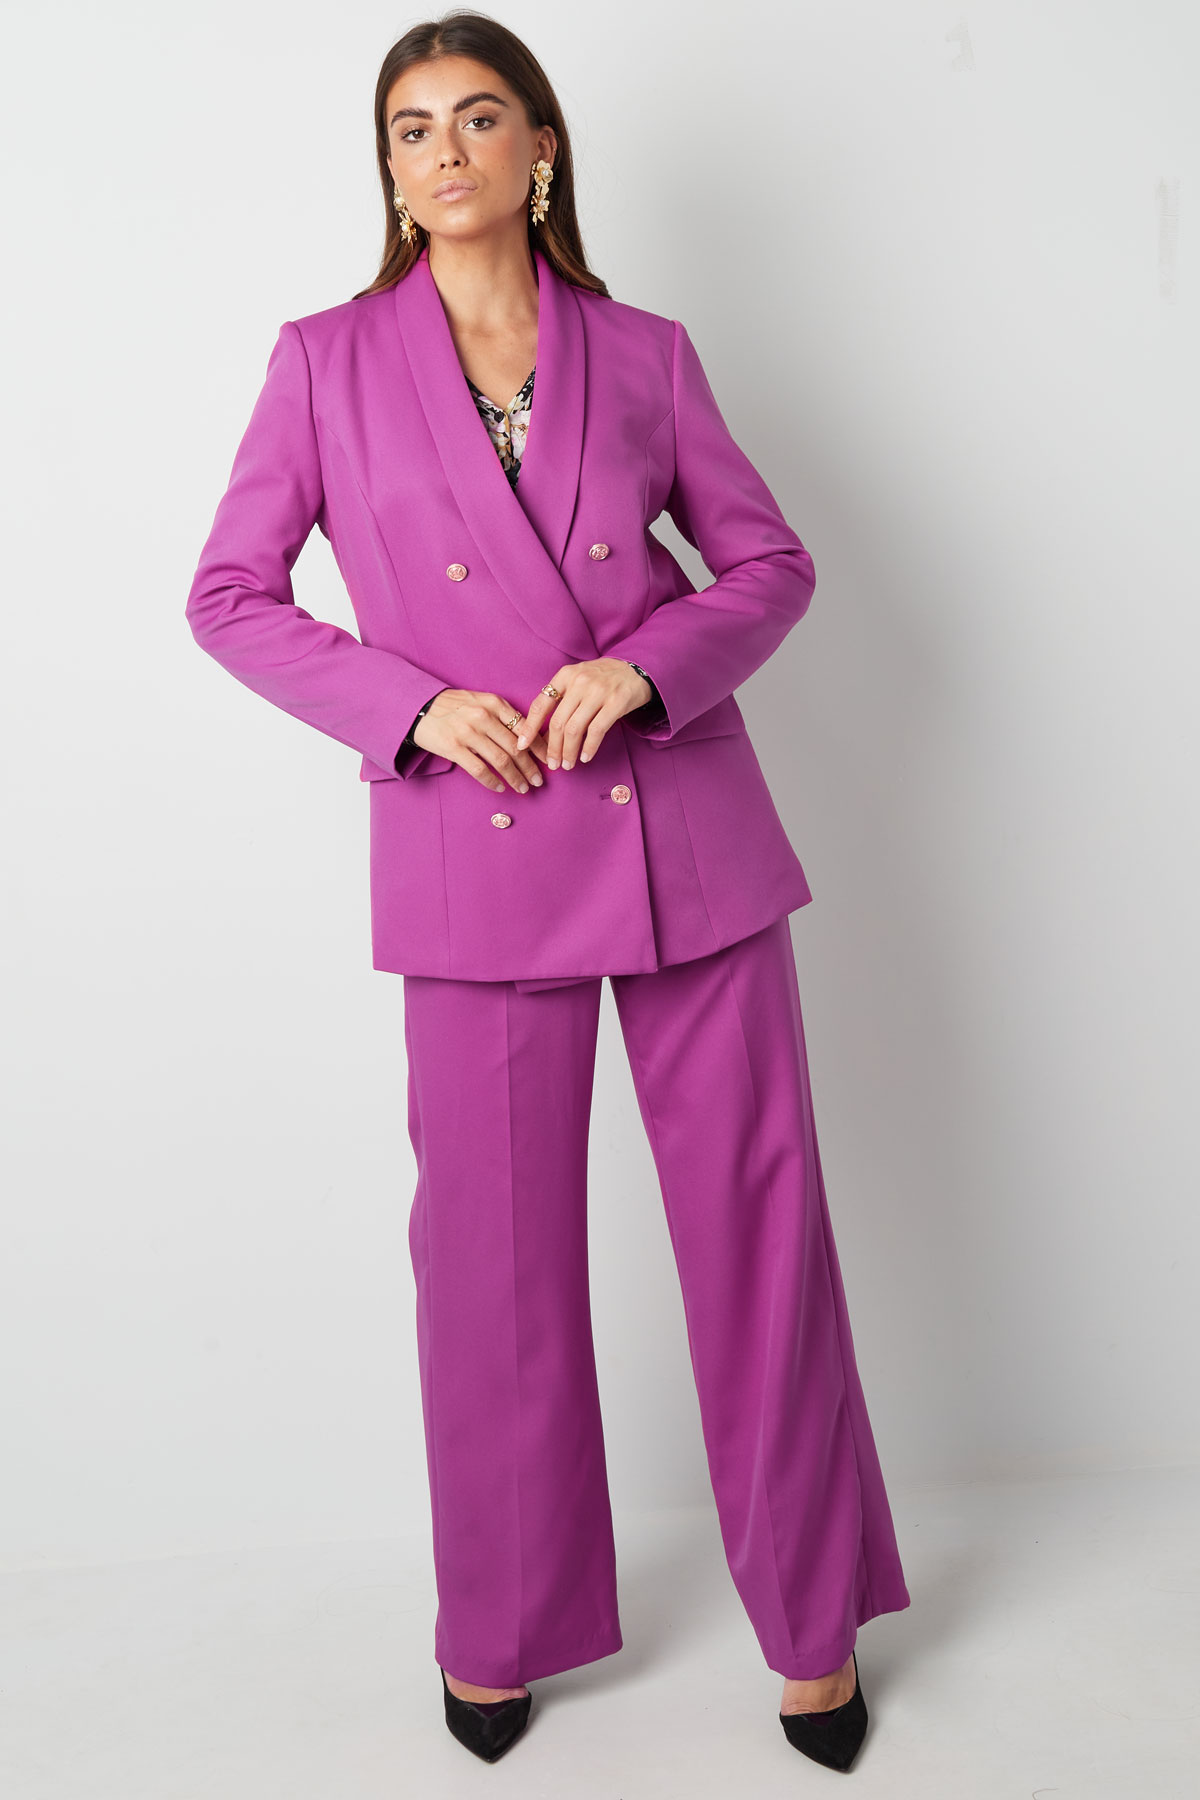 Pantalon plissé - violet Image8